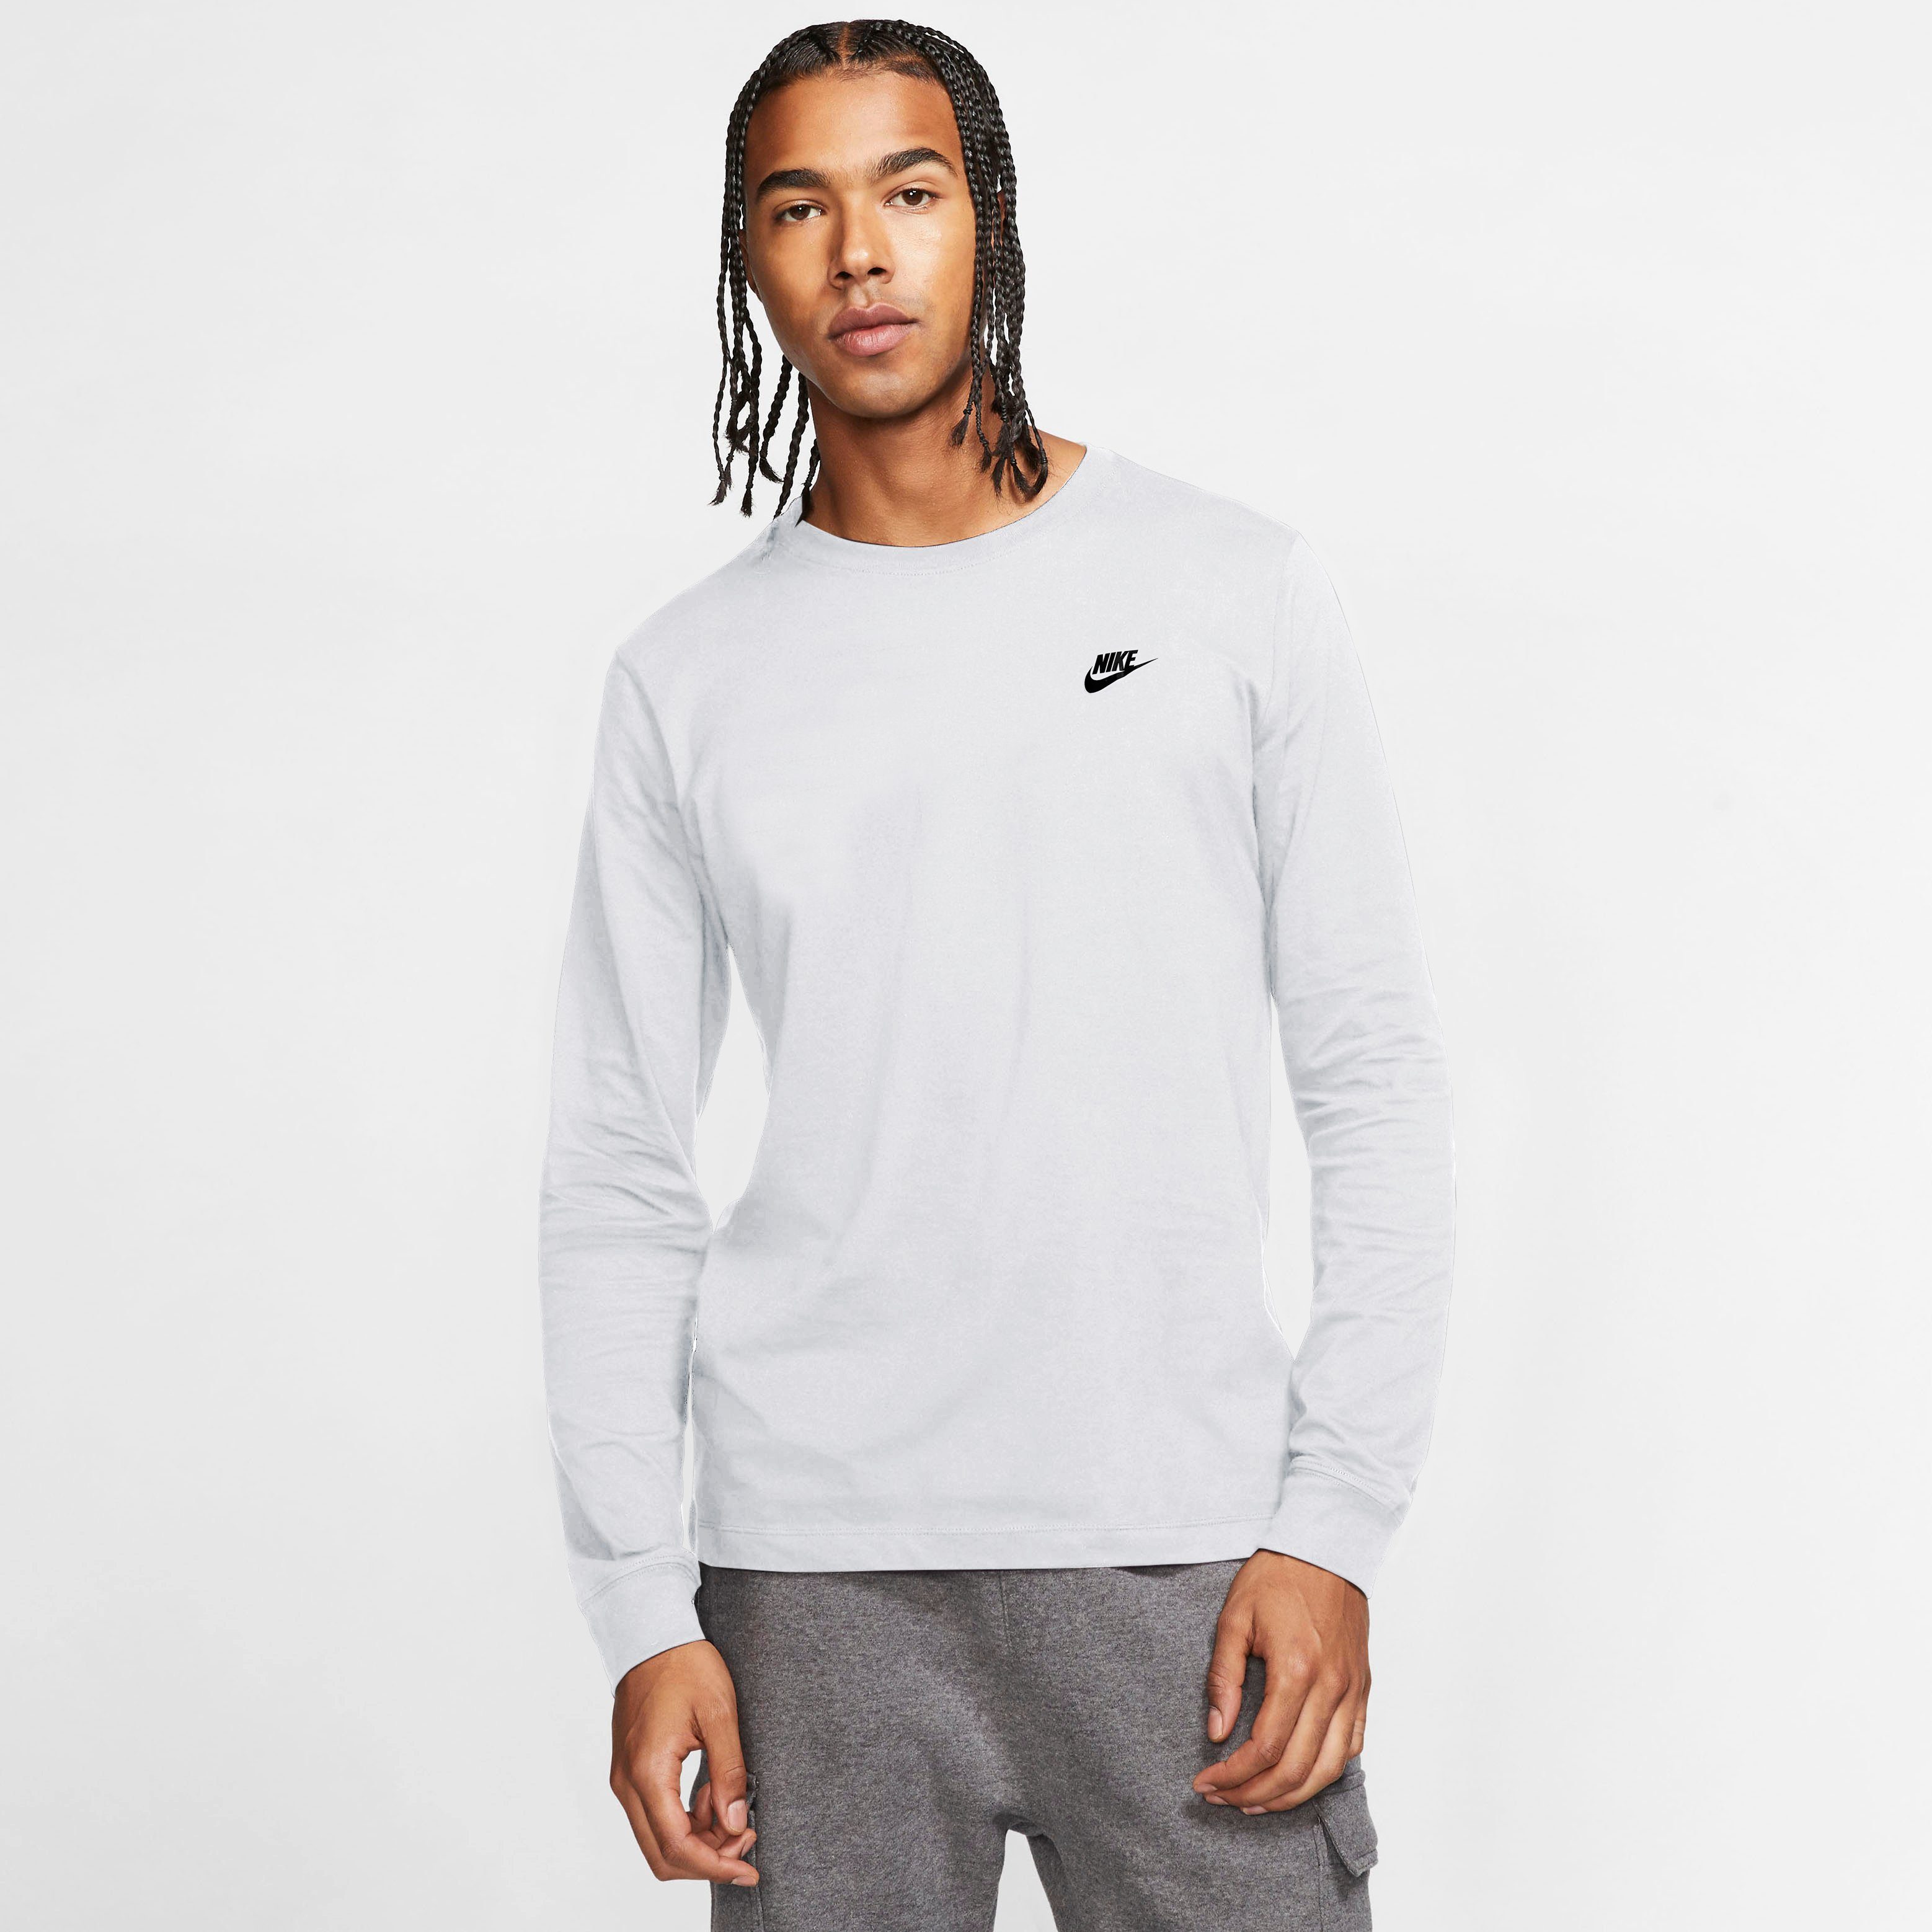 MEN'S Sportswear T-SHIRT Langarmshirt LONG-SLEEVE weiß Nike